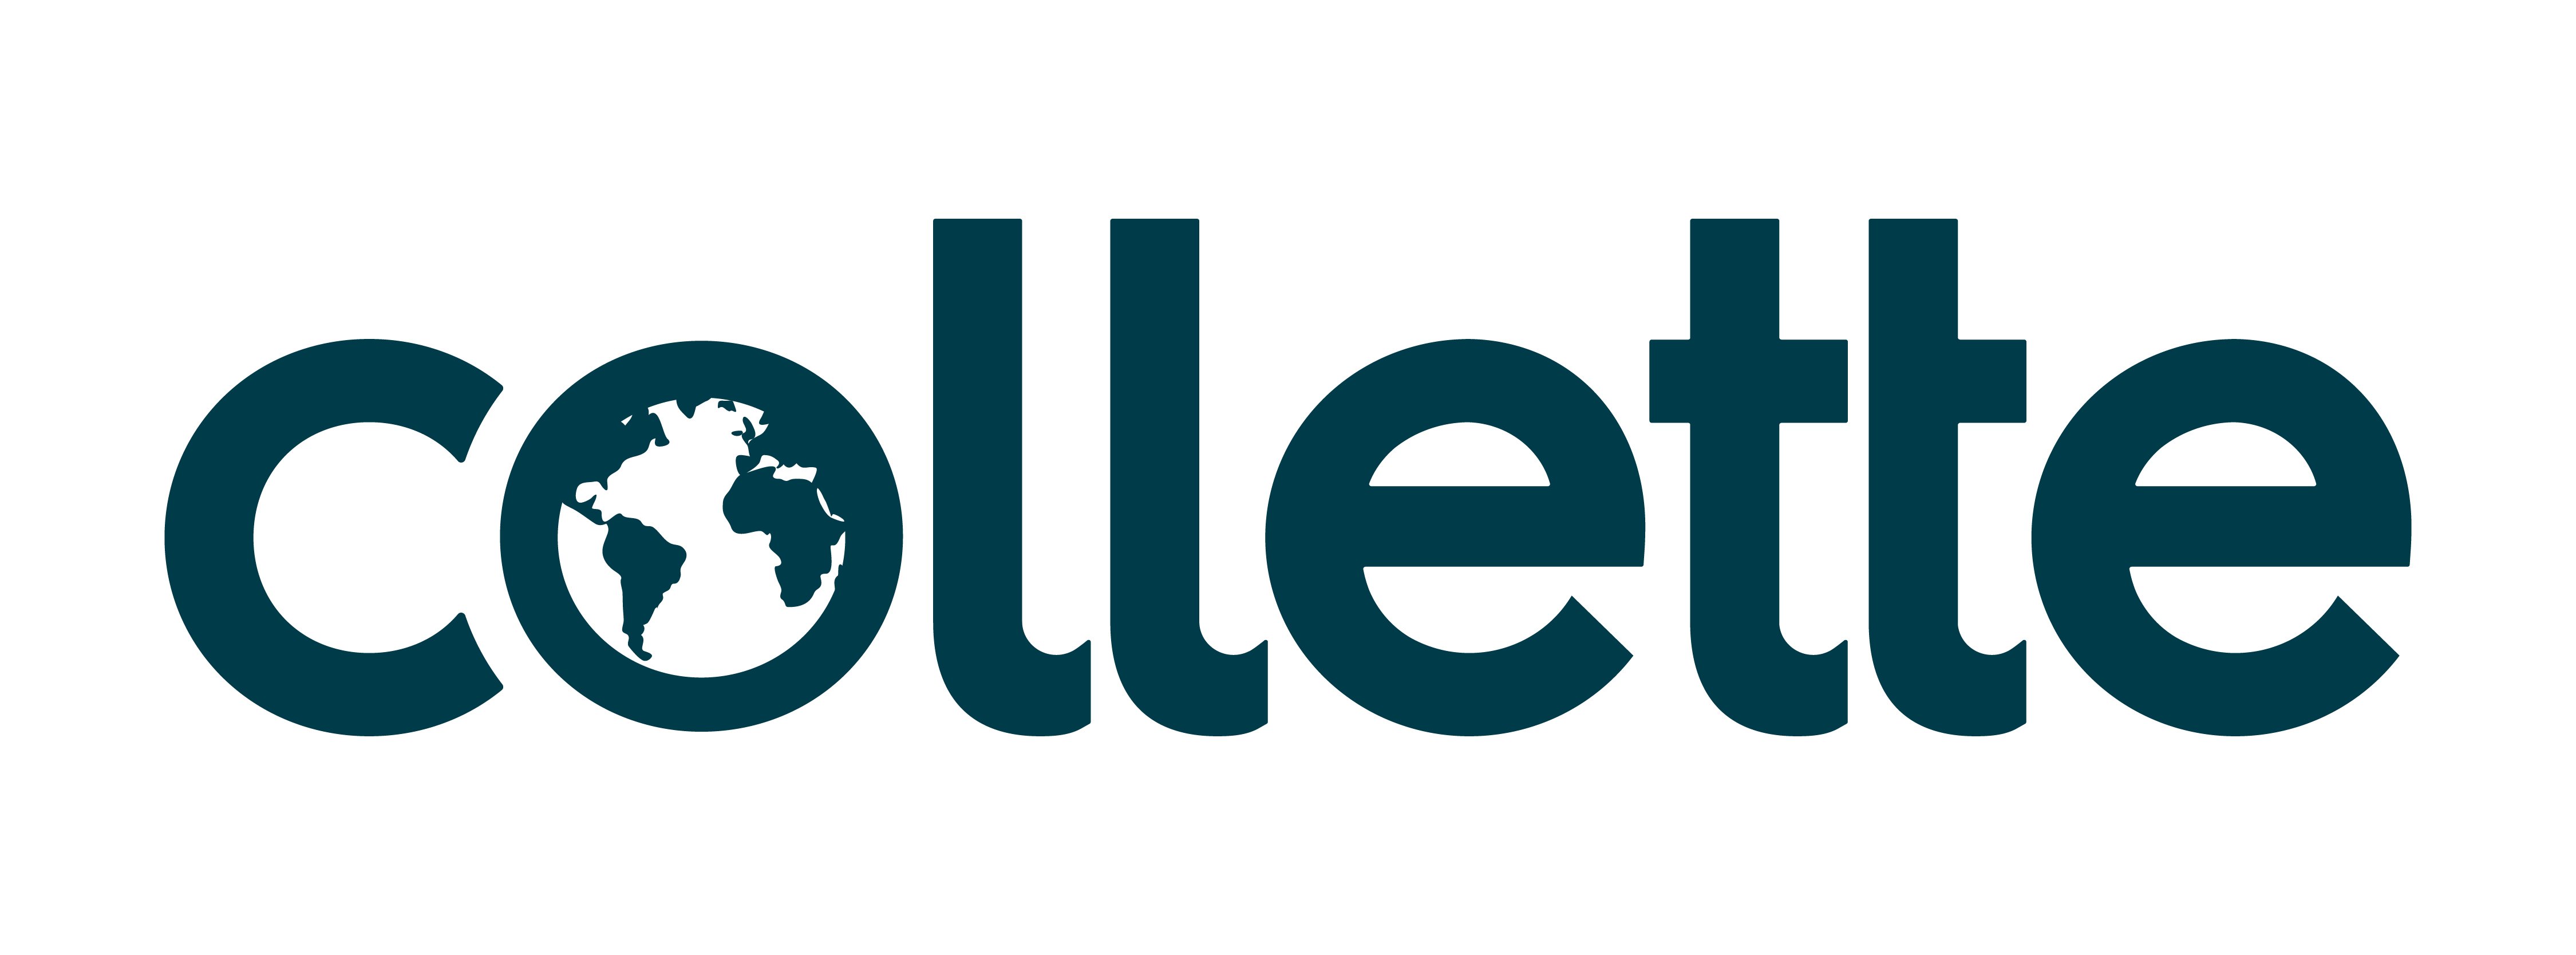 collette_logo image